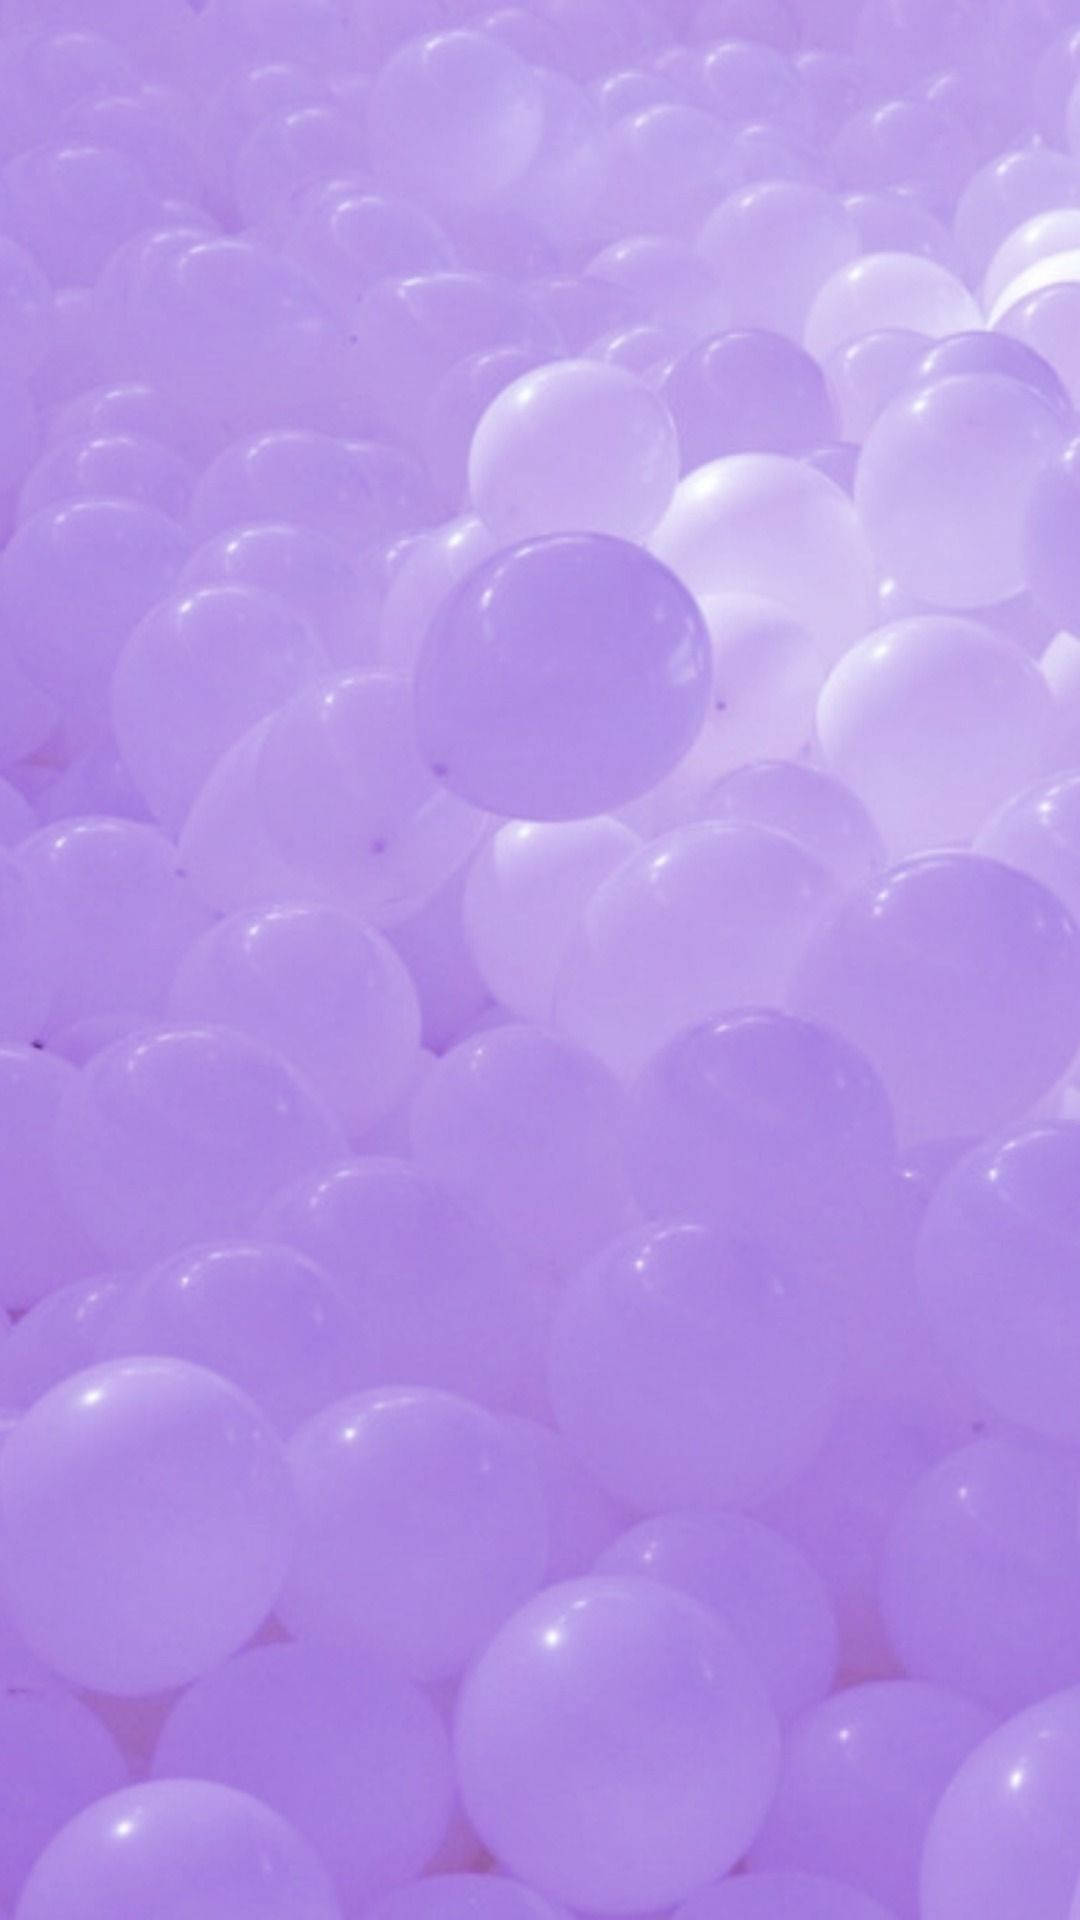 Cute Purple Balloons Wallpaper